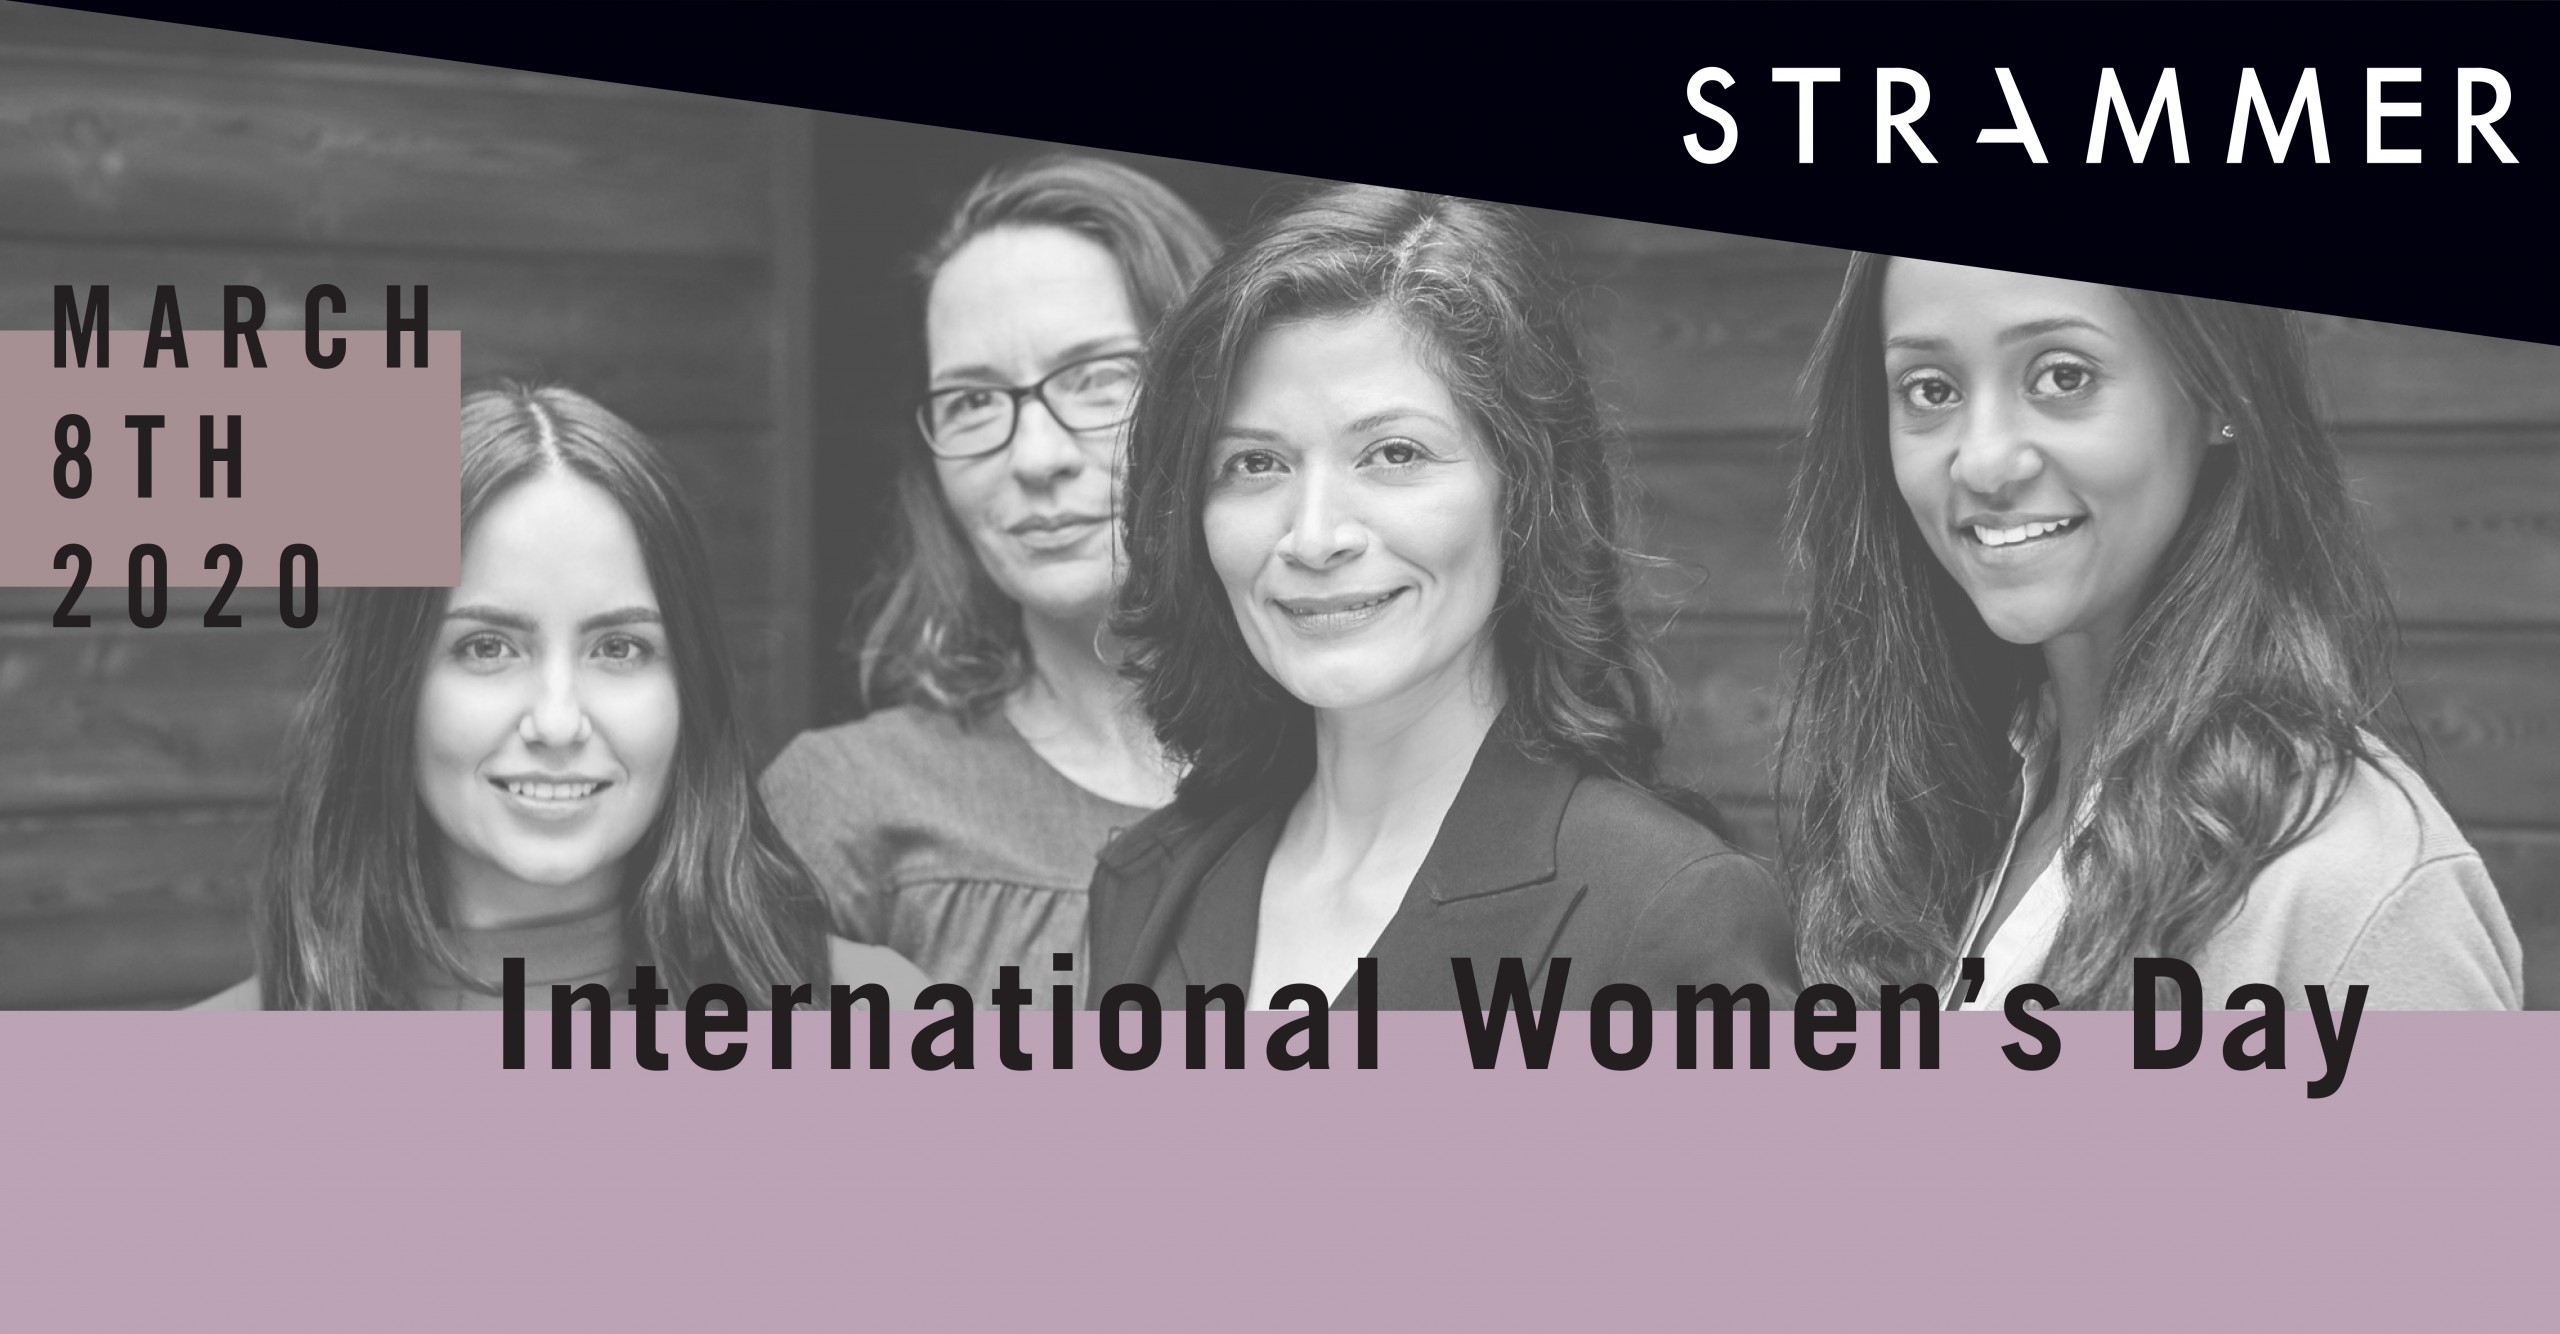 International Women’s Day: March 8th, 2020